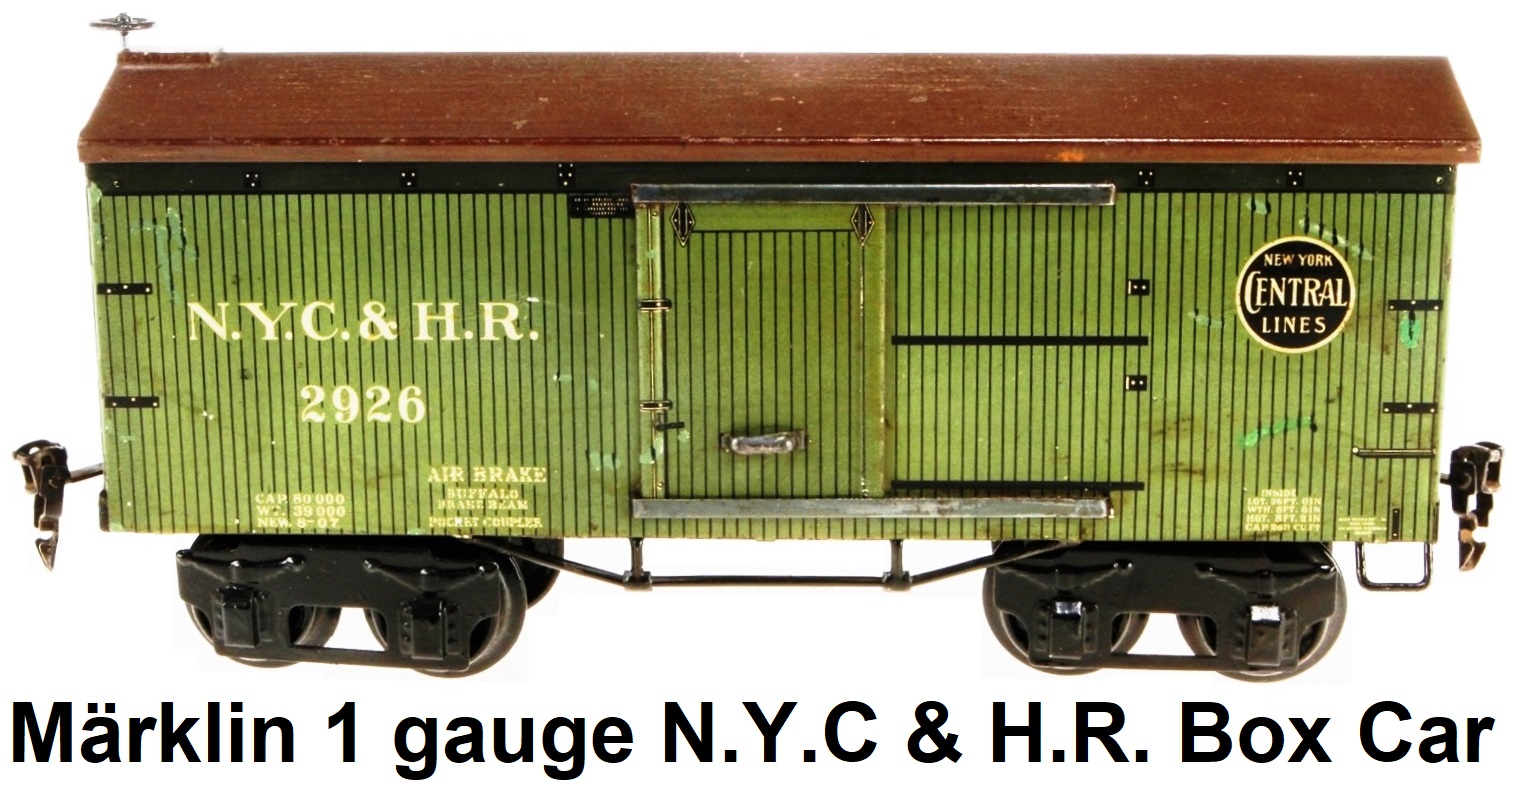 Märklin 1 gauge American market covered goods wagon N.Y.C & H.R. #2926 circa 1920's